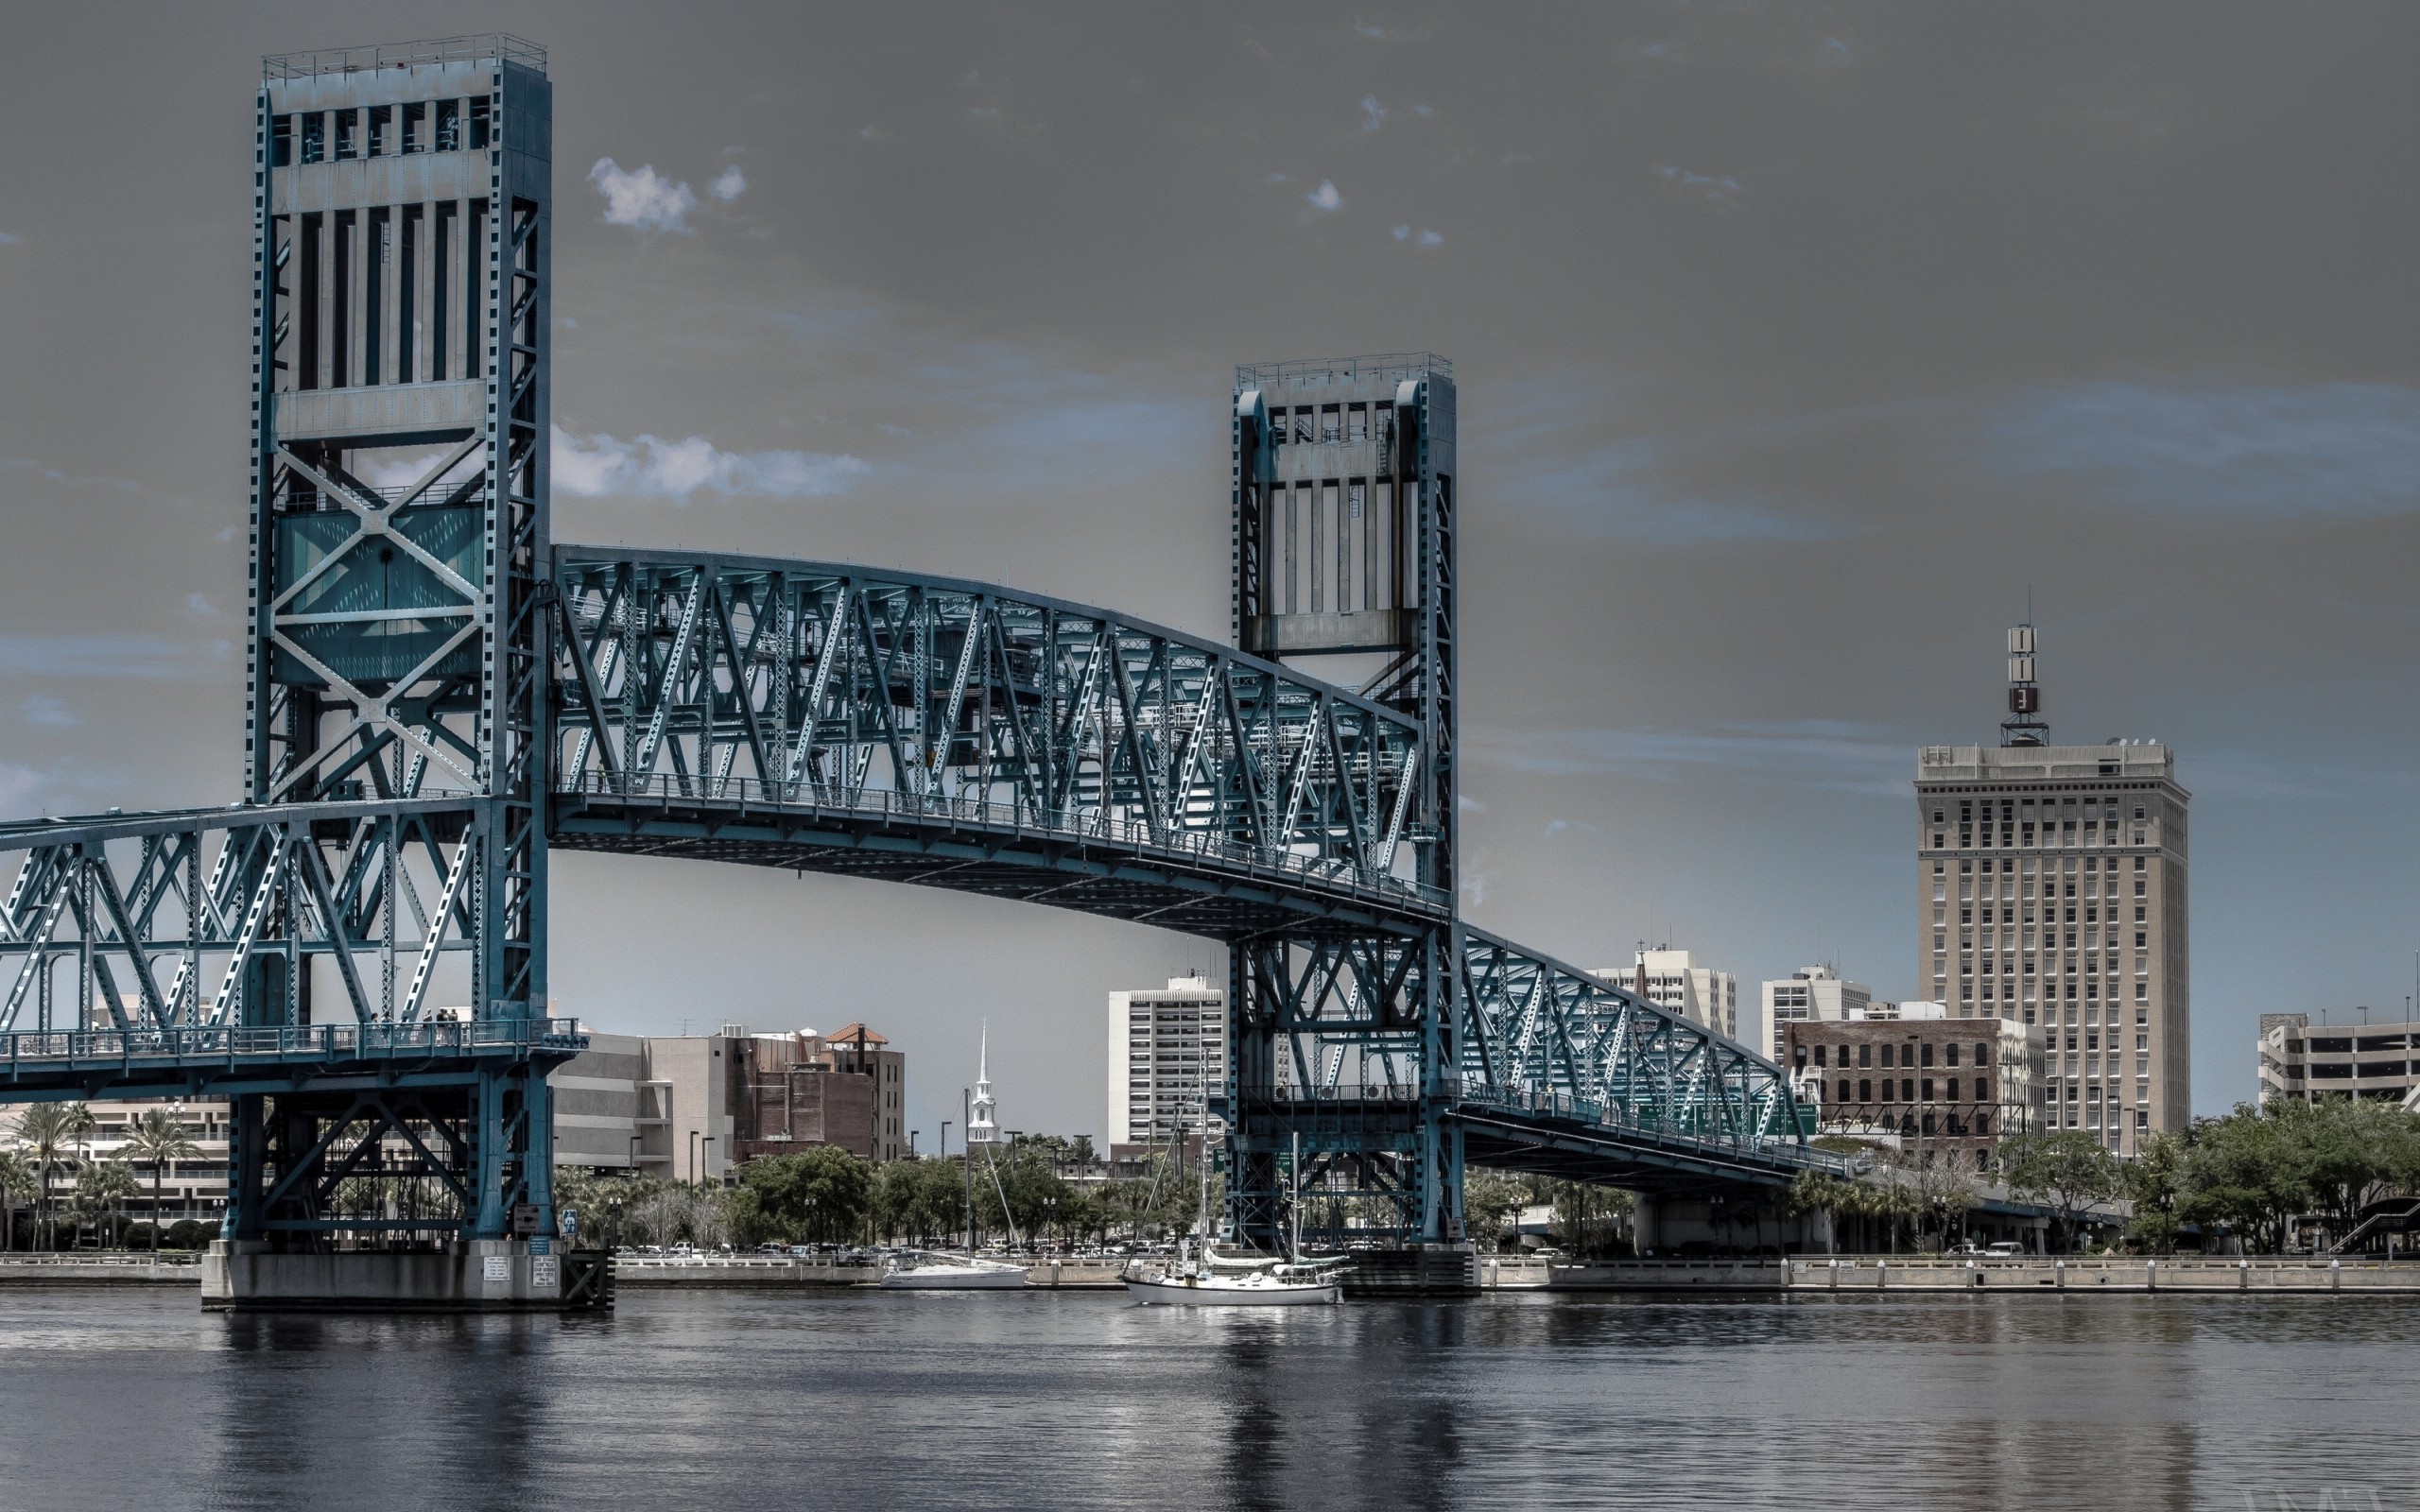 architecture, City, Cityscape, Bridge, River, Building, Ship, Jacksonville, Florida, USA, Yacht, Clouds, Trees, Metal Wallpaper